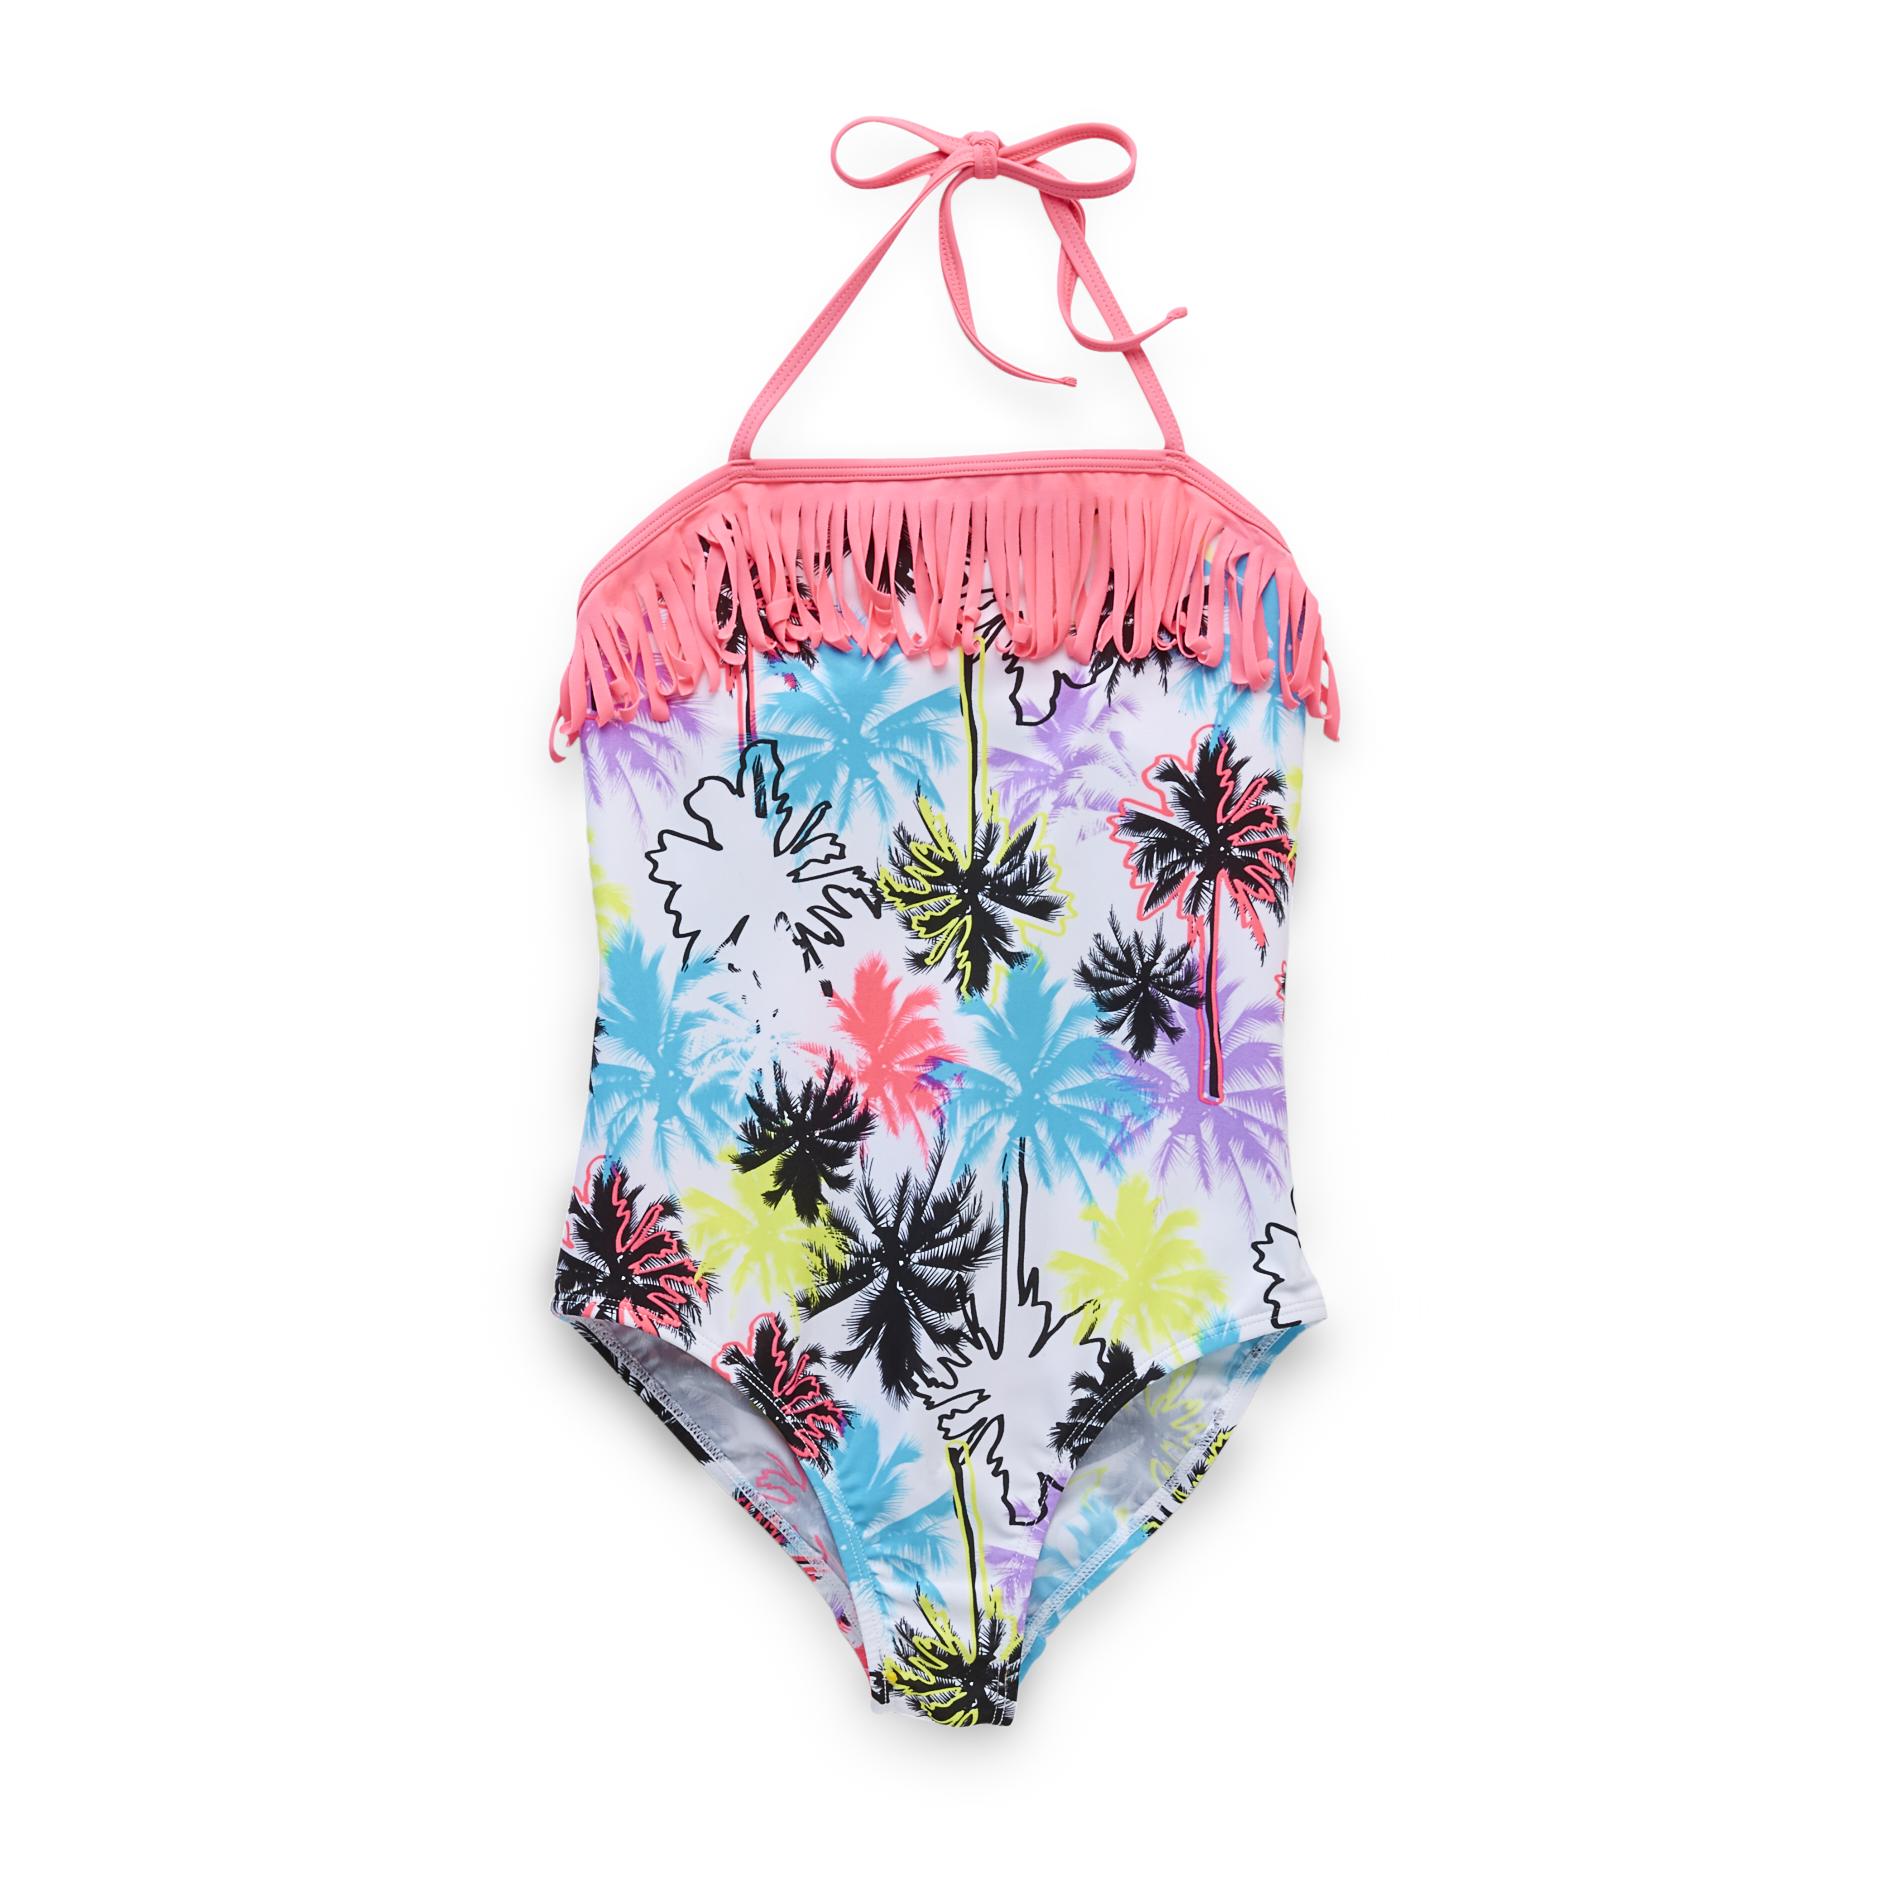 Joe Boxer Girl's Swimsuit - Palm Print